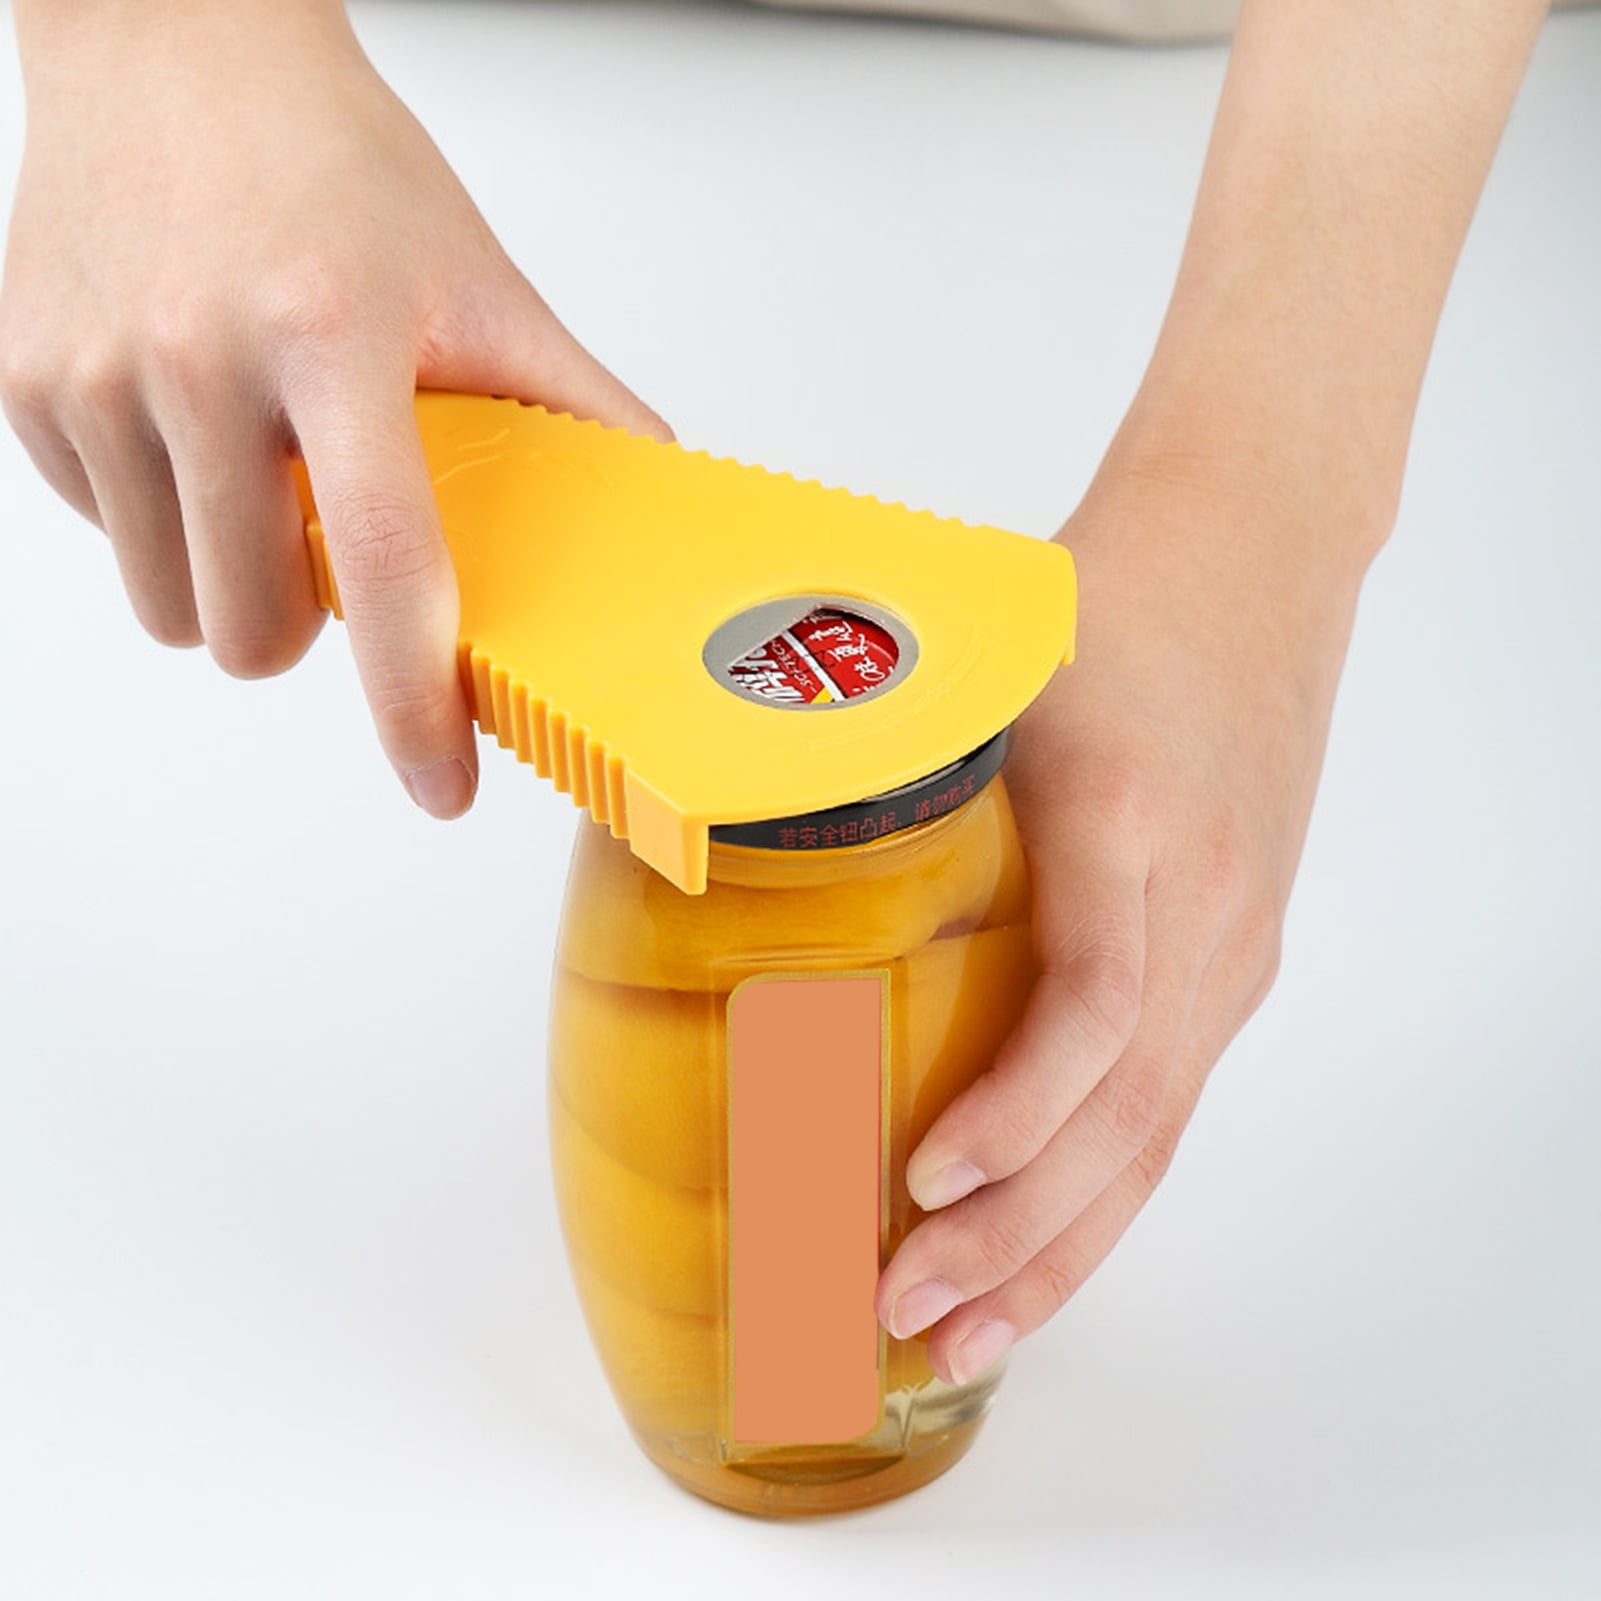 Jar Opener For Weak Hands - Under Cabinet, Easy Grip, One Handed Jar & Bottle  Opener - Removes Tight Jar Lid For Seniors With Arthritis - Essential Ki